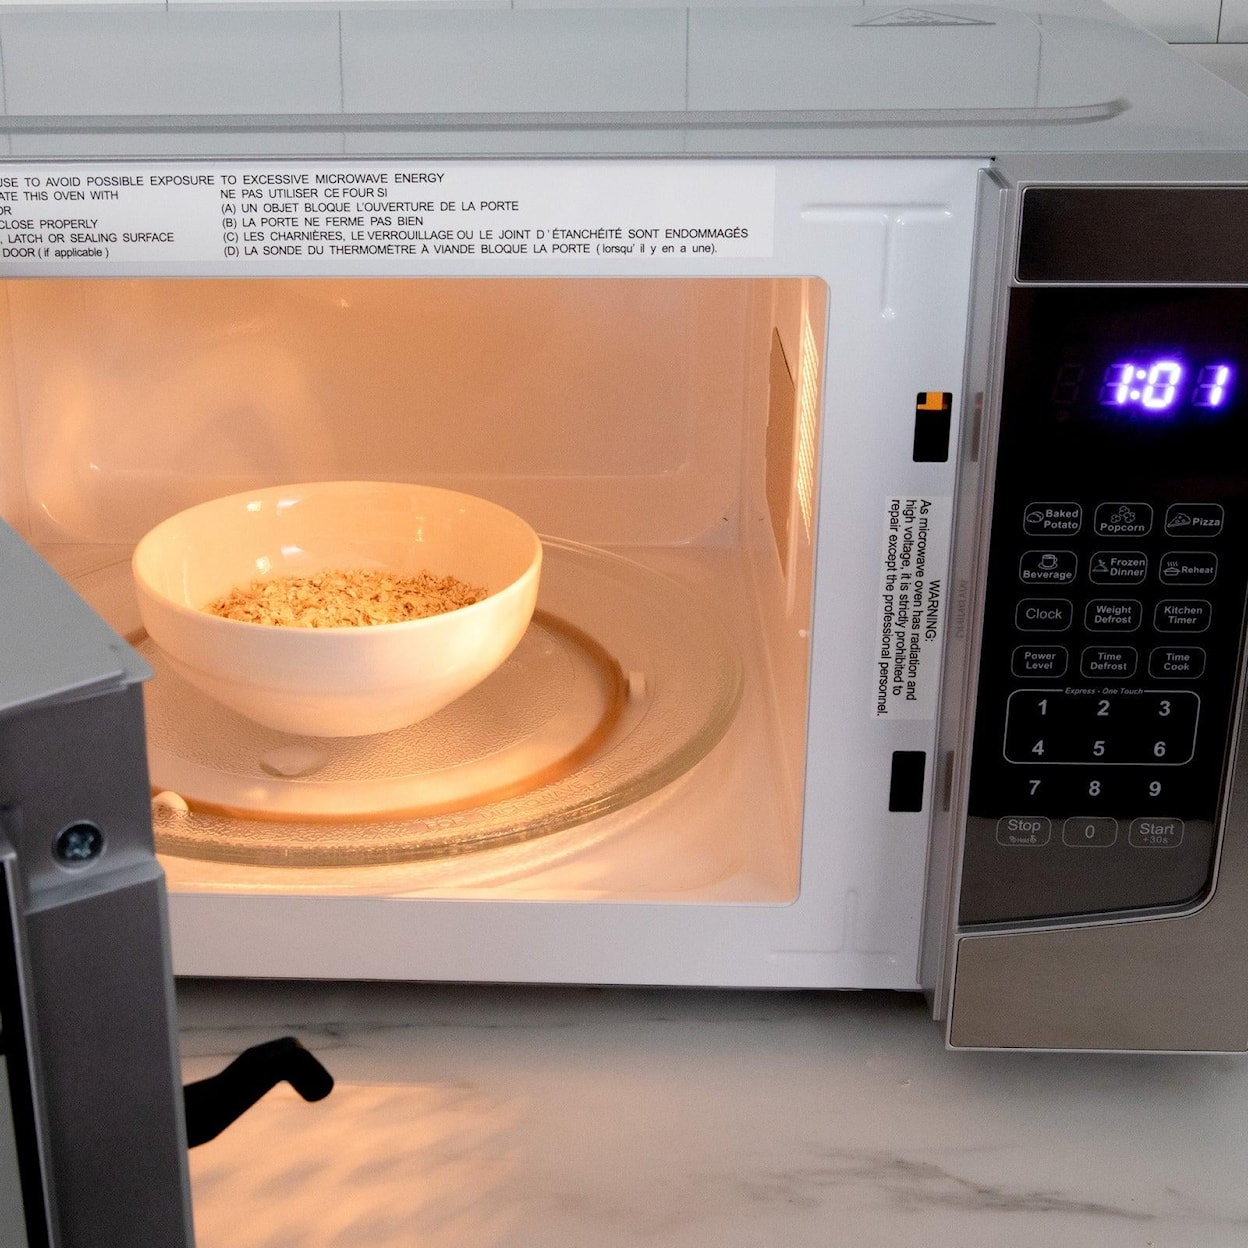 Avanti Microwave Countertop Microwave